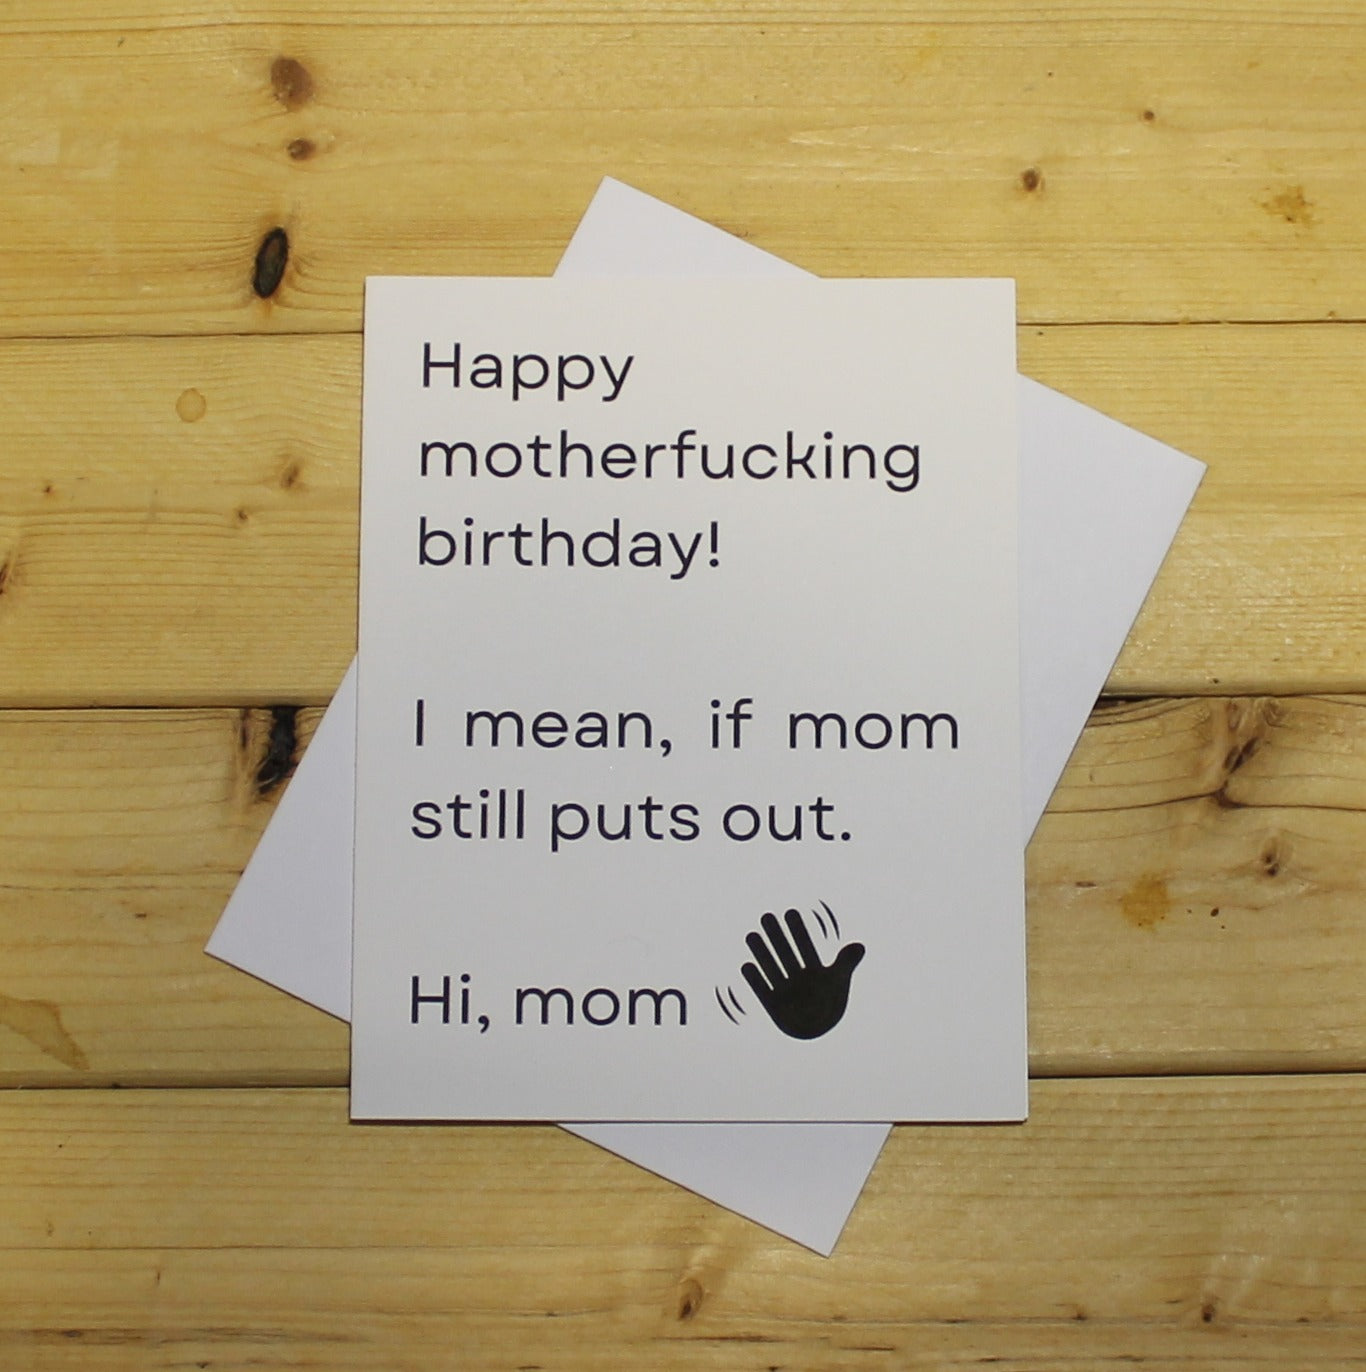 Funny Birthday Card: "Happy motherfucking birthday! I mean, if mom still puts out. Hi, mom!"